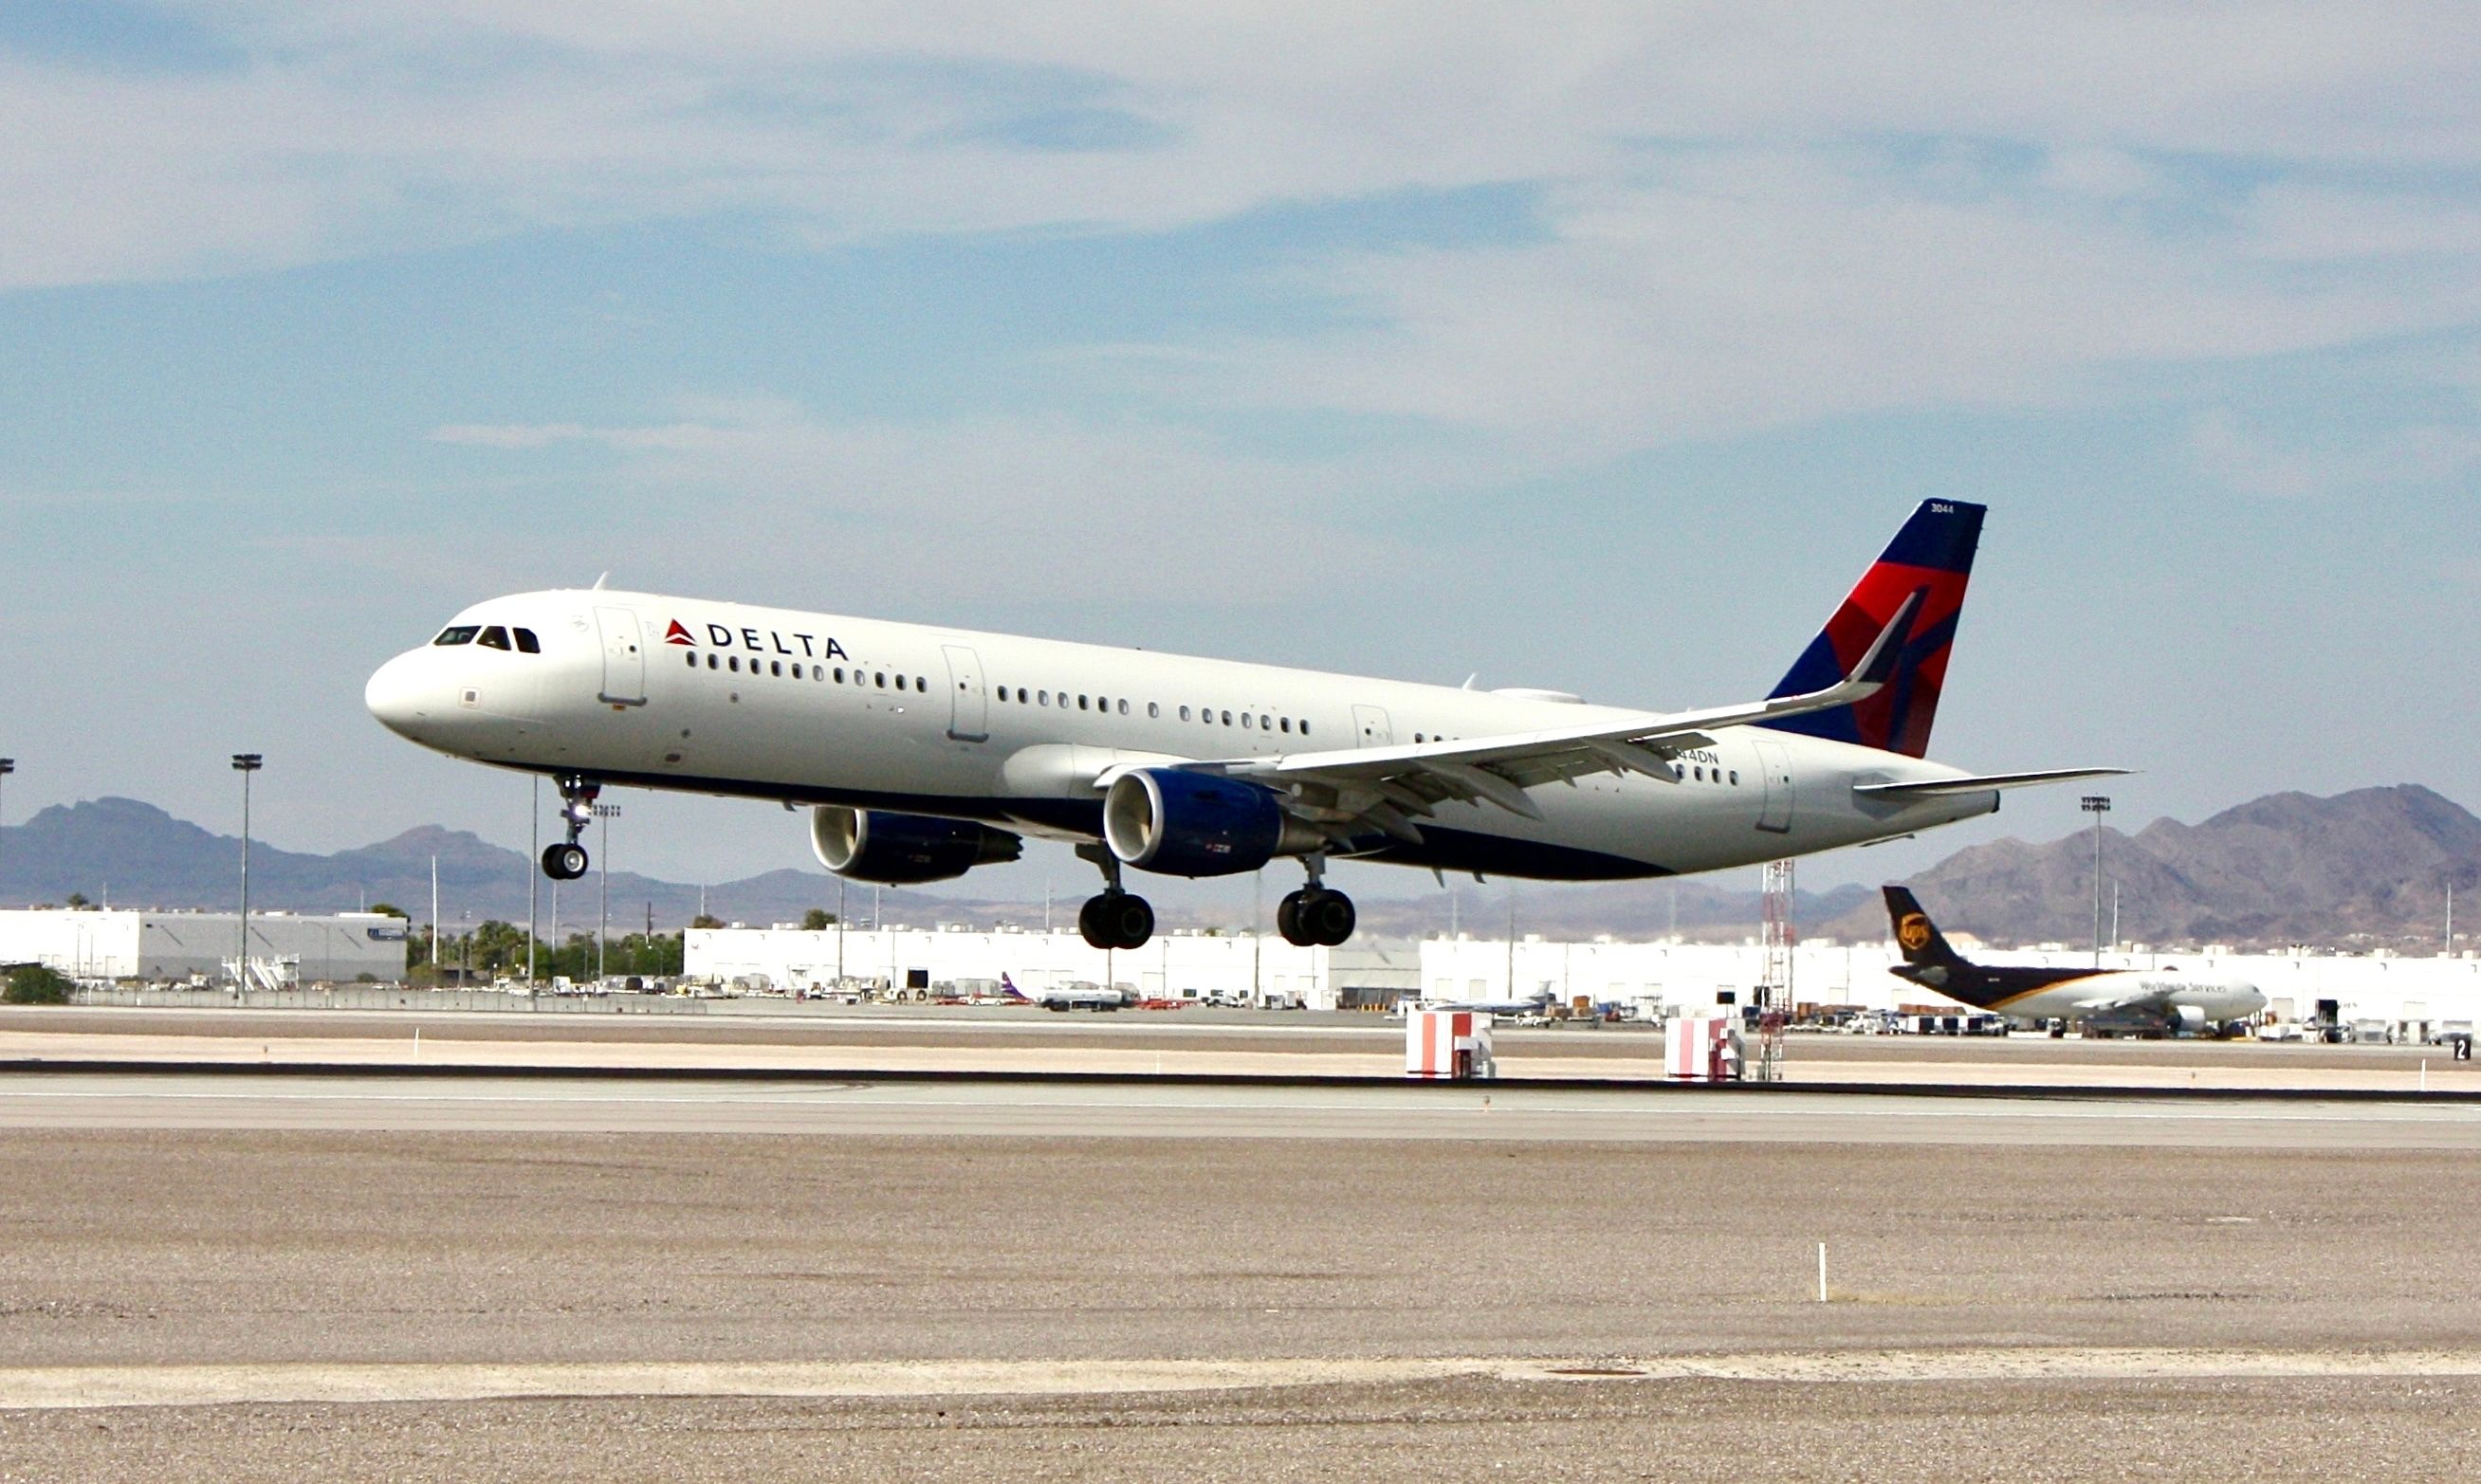 Delta Air Lines Airbus A321ceo landing in Las Vegas airport.